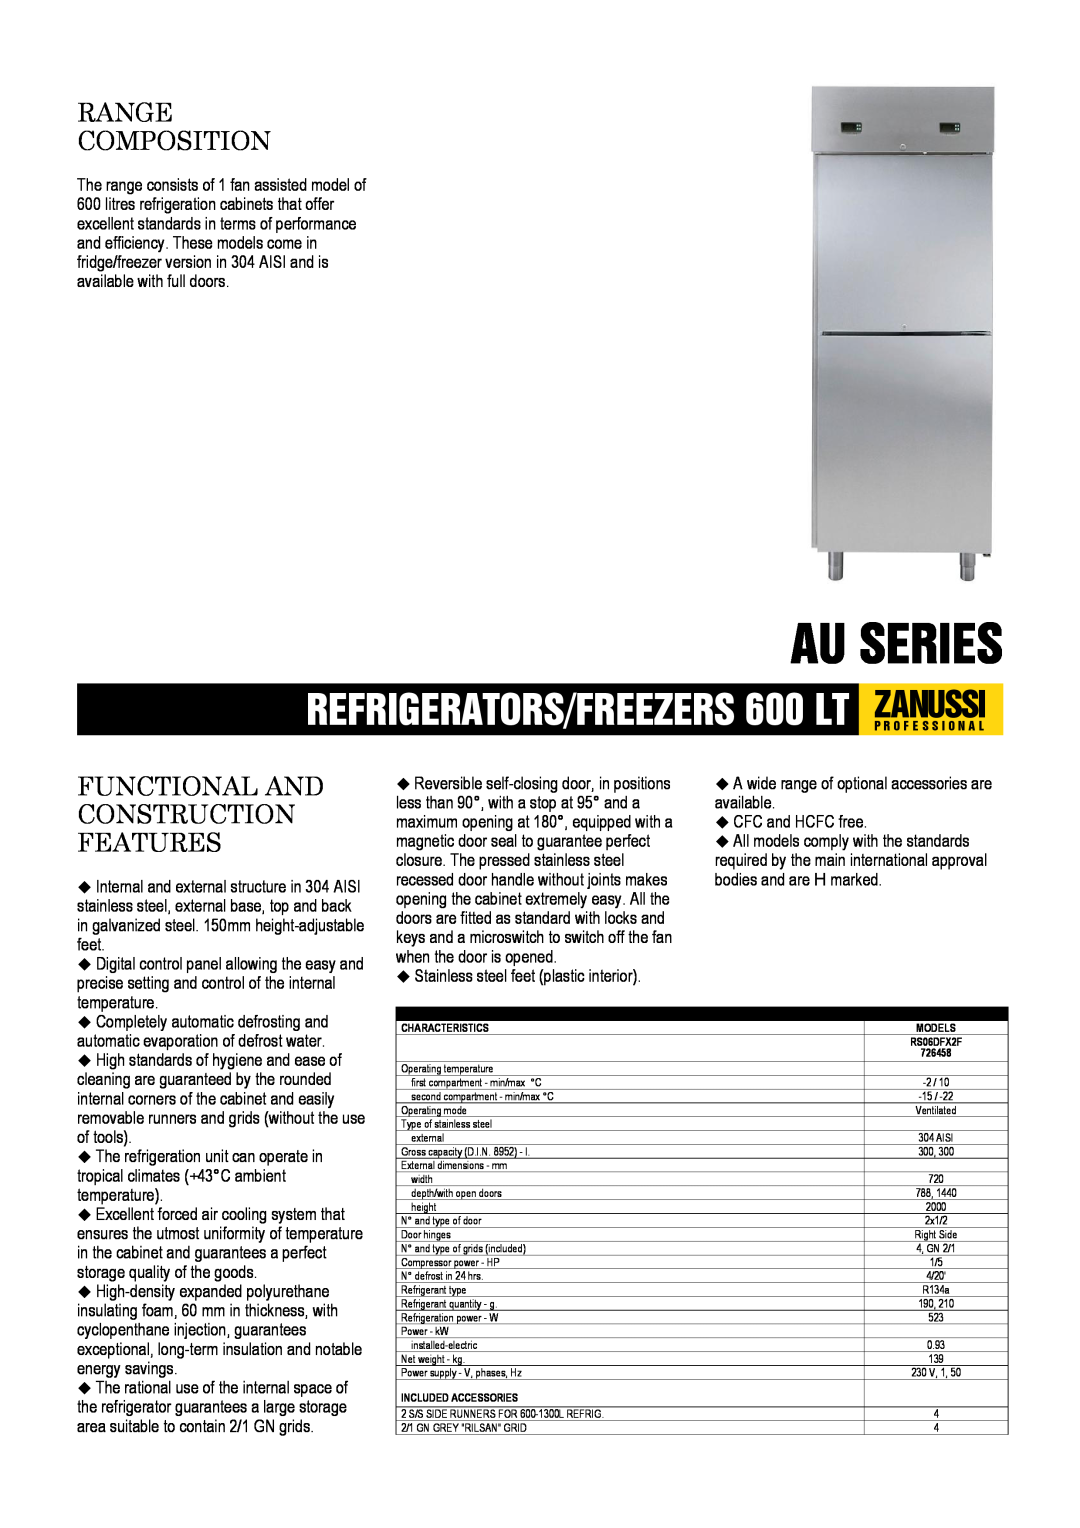 Electrolux RS06DFX2F dimensions Au Series, REFRIGERATORS/FREEZERS 600 LT ZANUSSIP R O F E S S I O N A L, Range Composition 